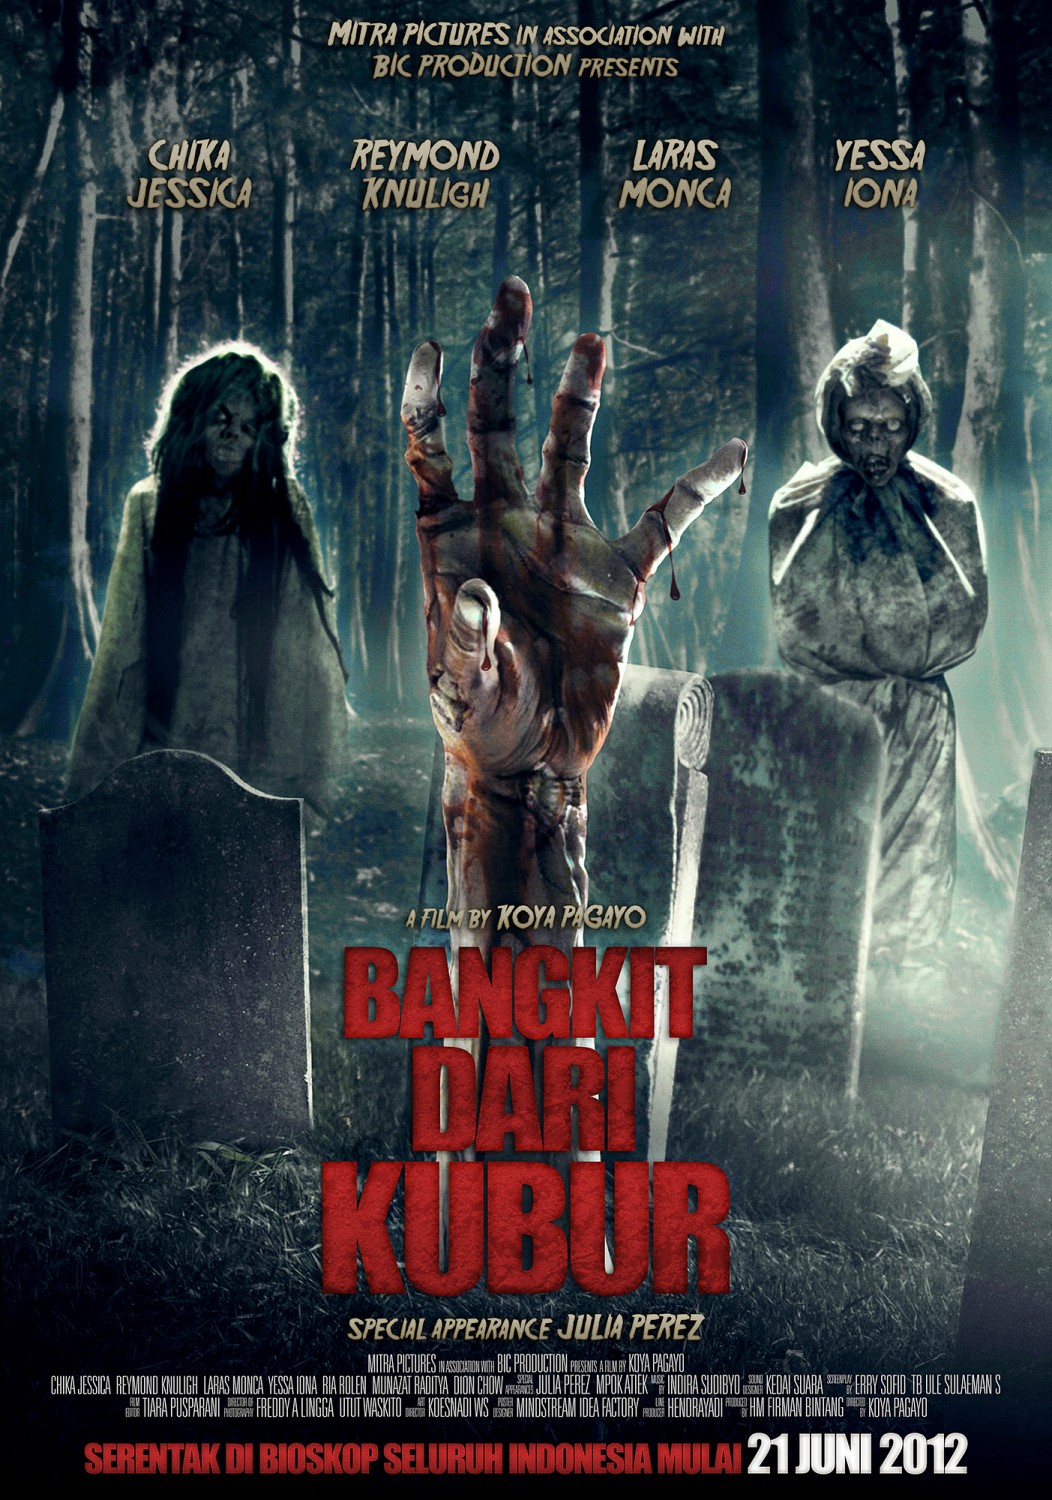 Extra Large Movie Poster Image for Bangkit dari Kubur 